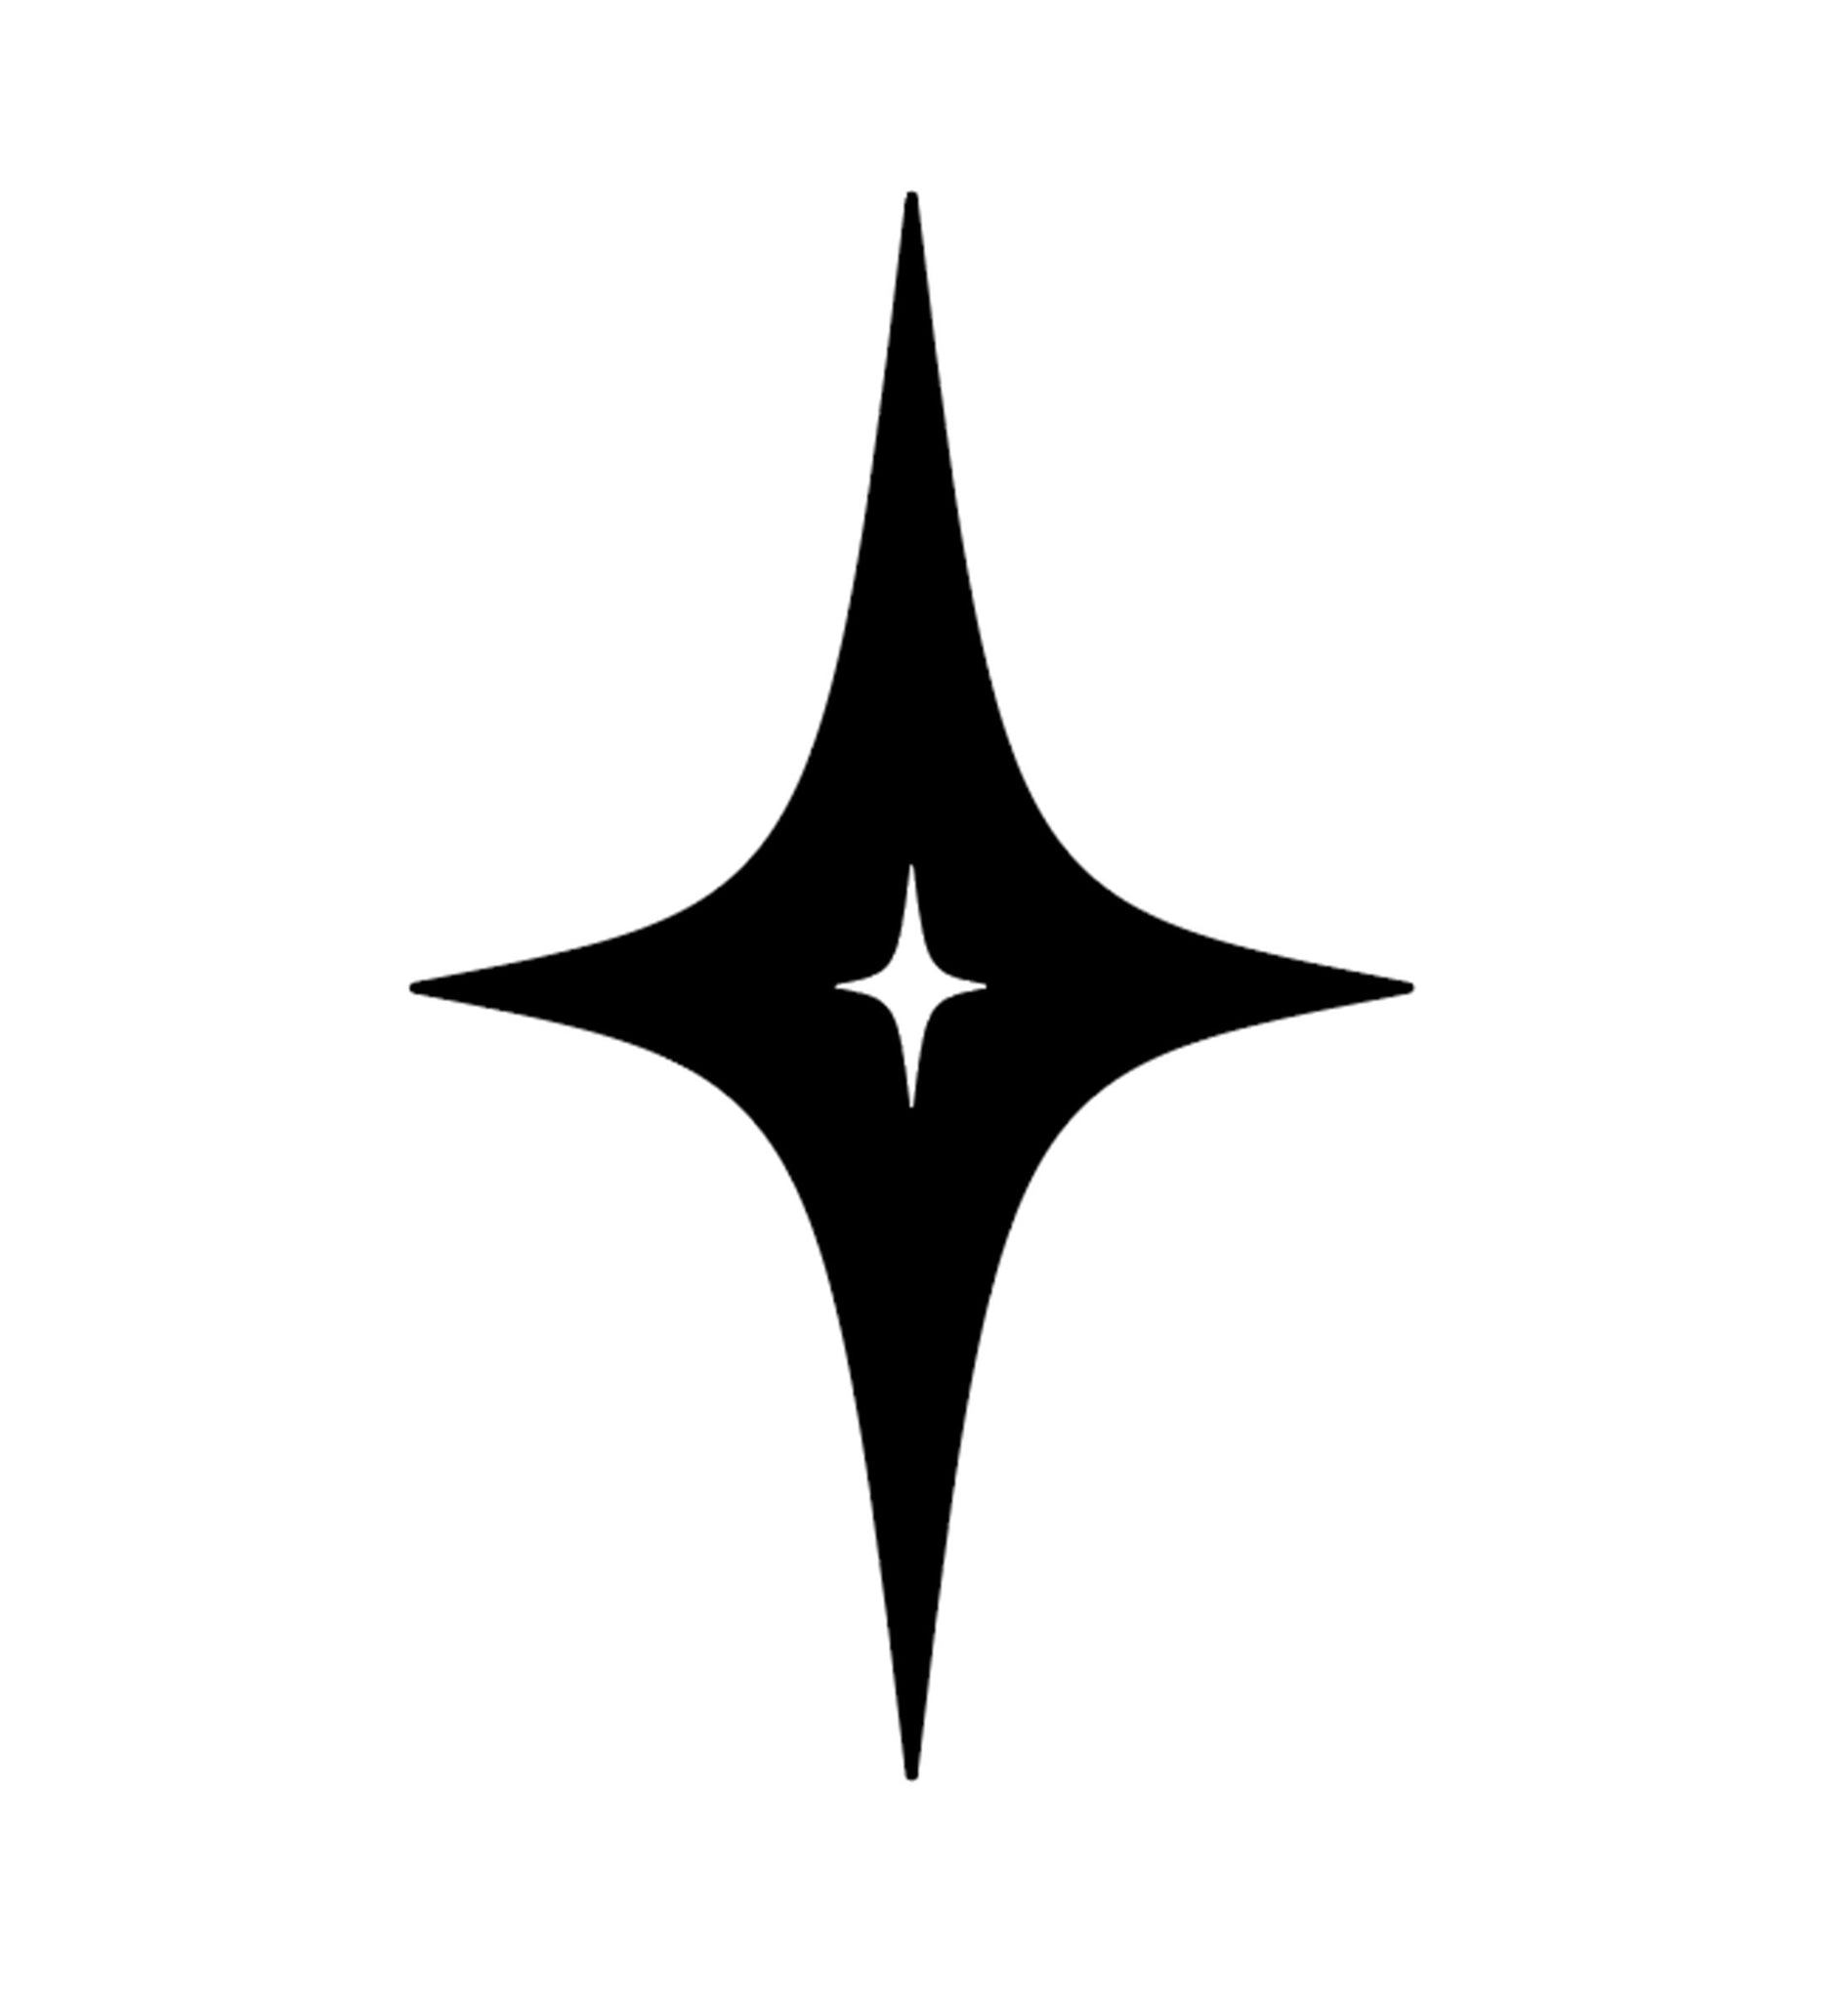 4 point star logo